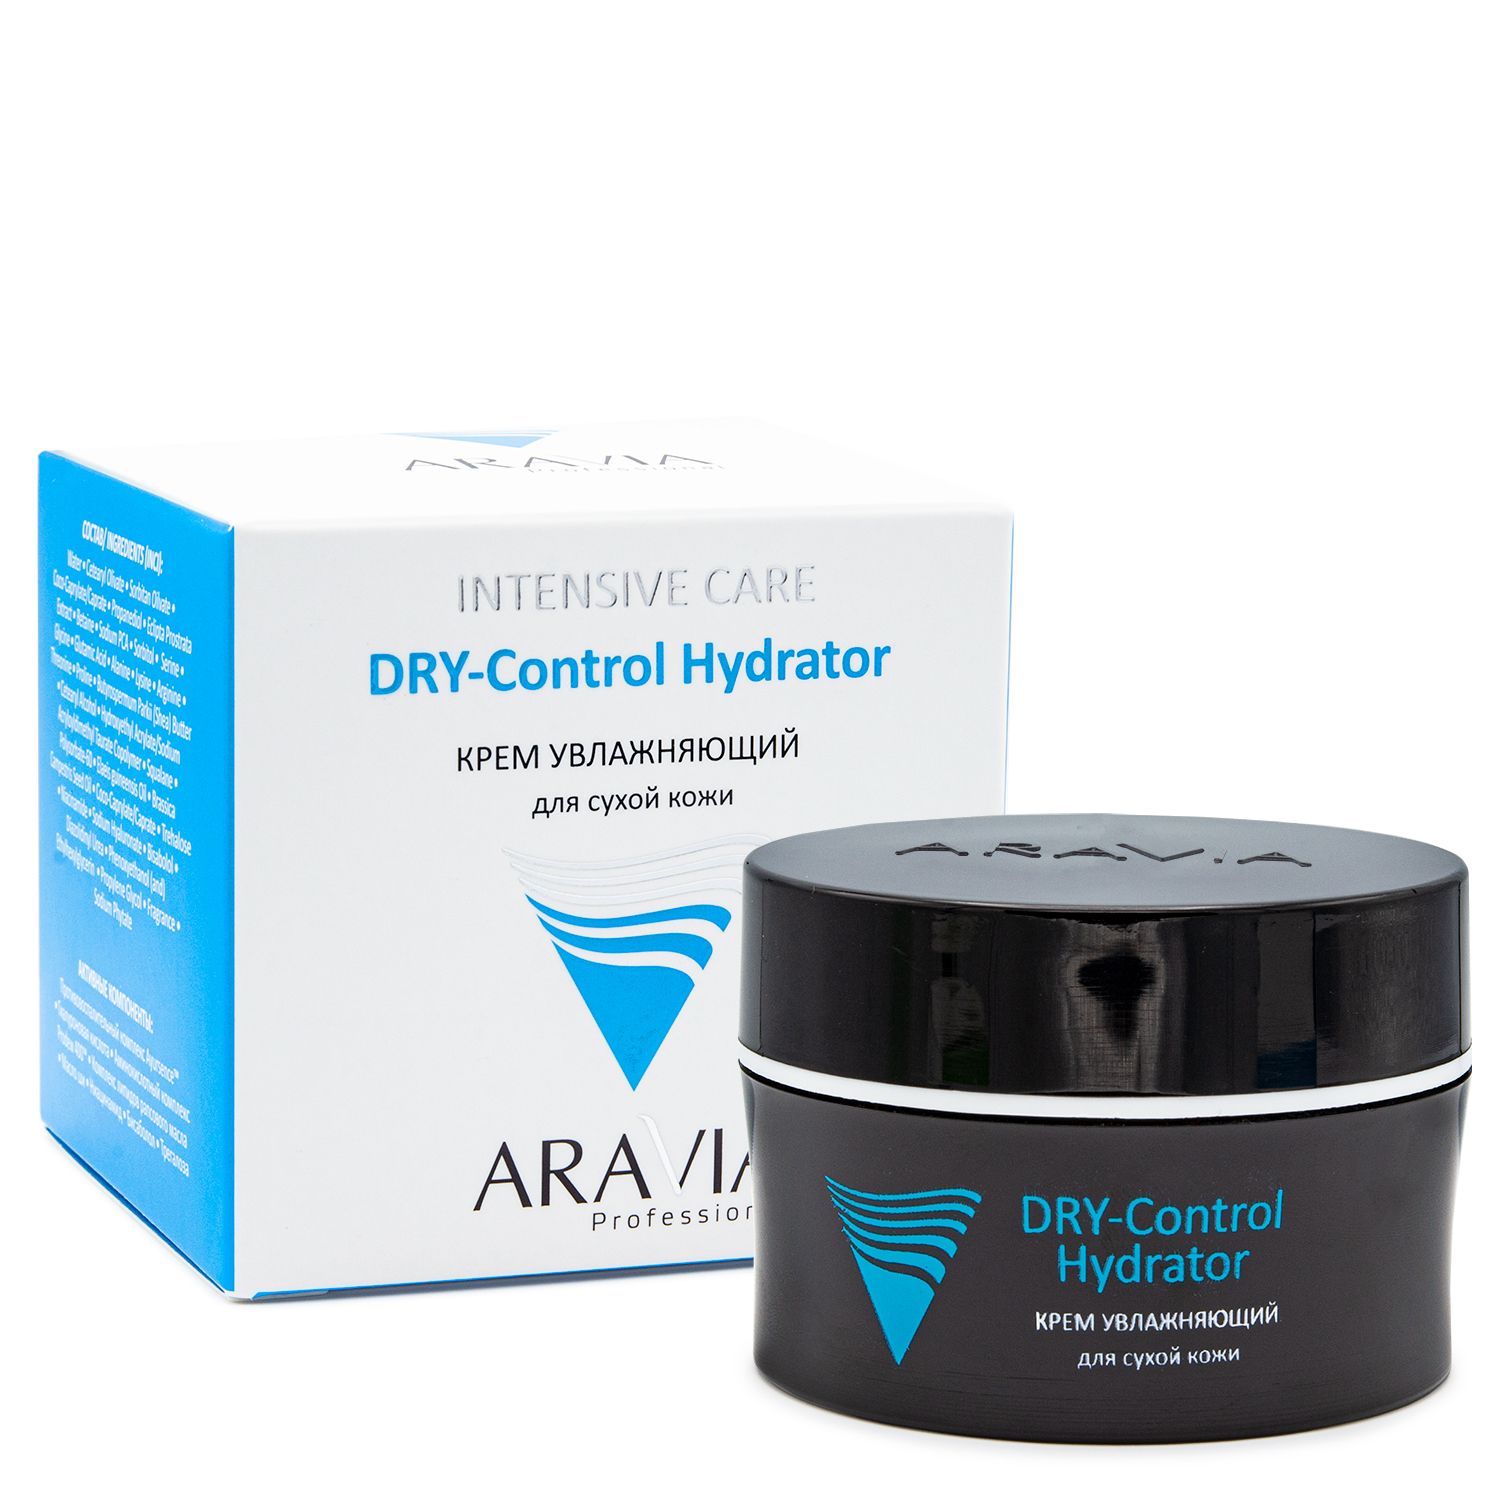 Крем увлажняющий для сухой кожи DRY-Control Hydrator, 50 мл, ARAVIA Professional. 6314